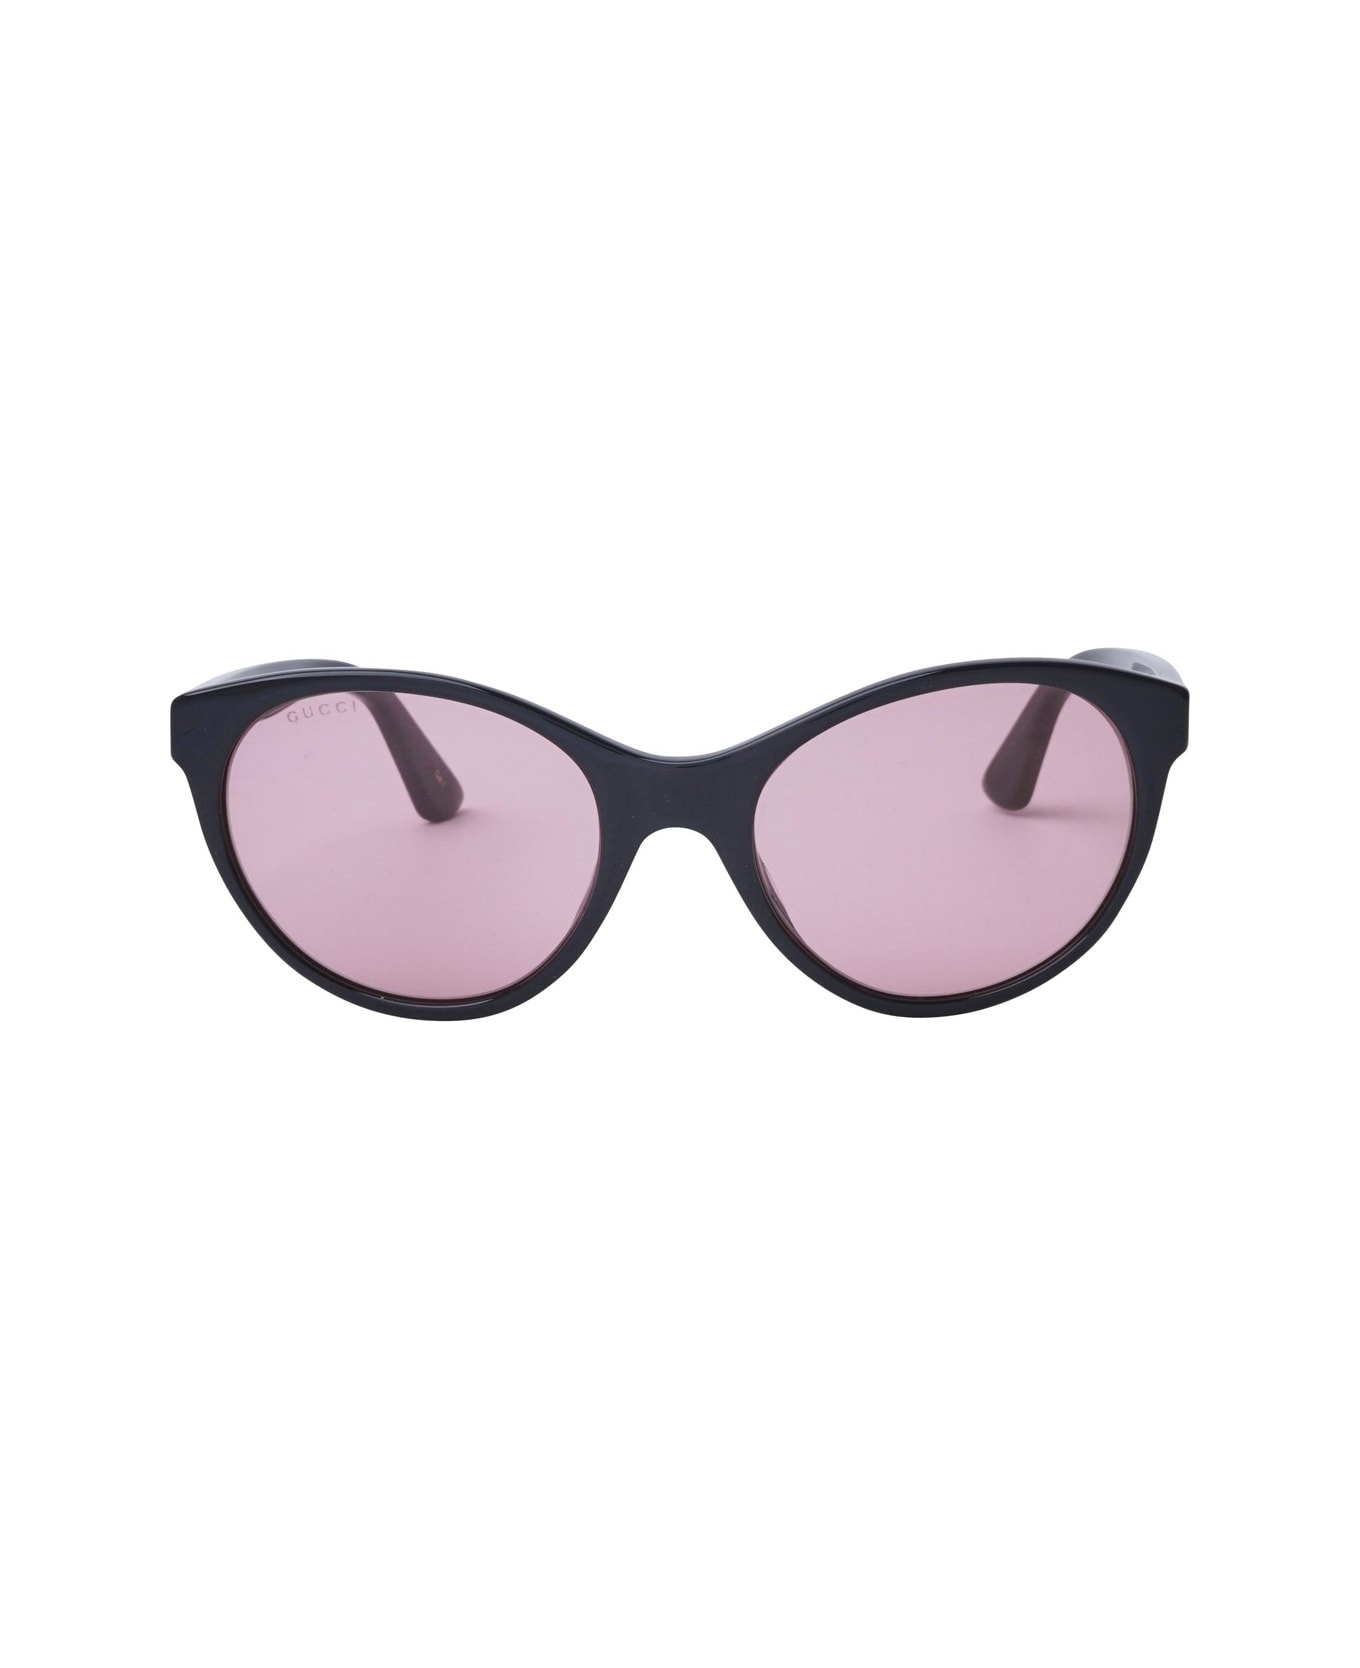 Gucci Eyewear Gg0419s Sunglasses - Nero